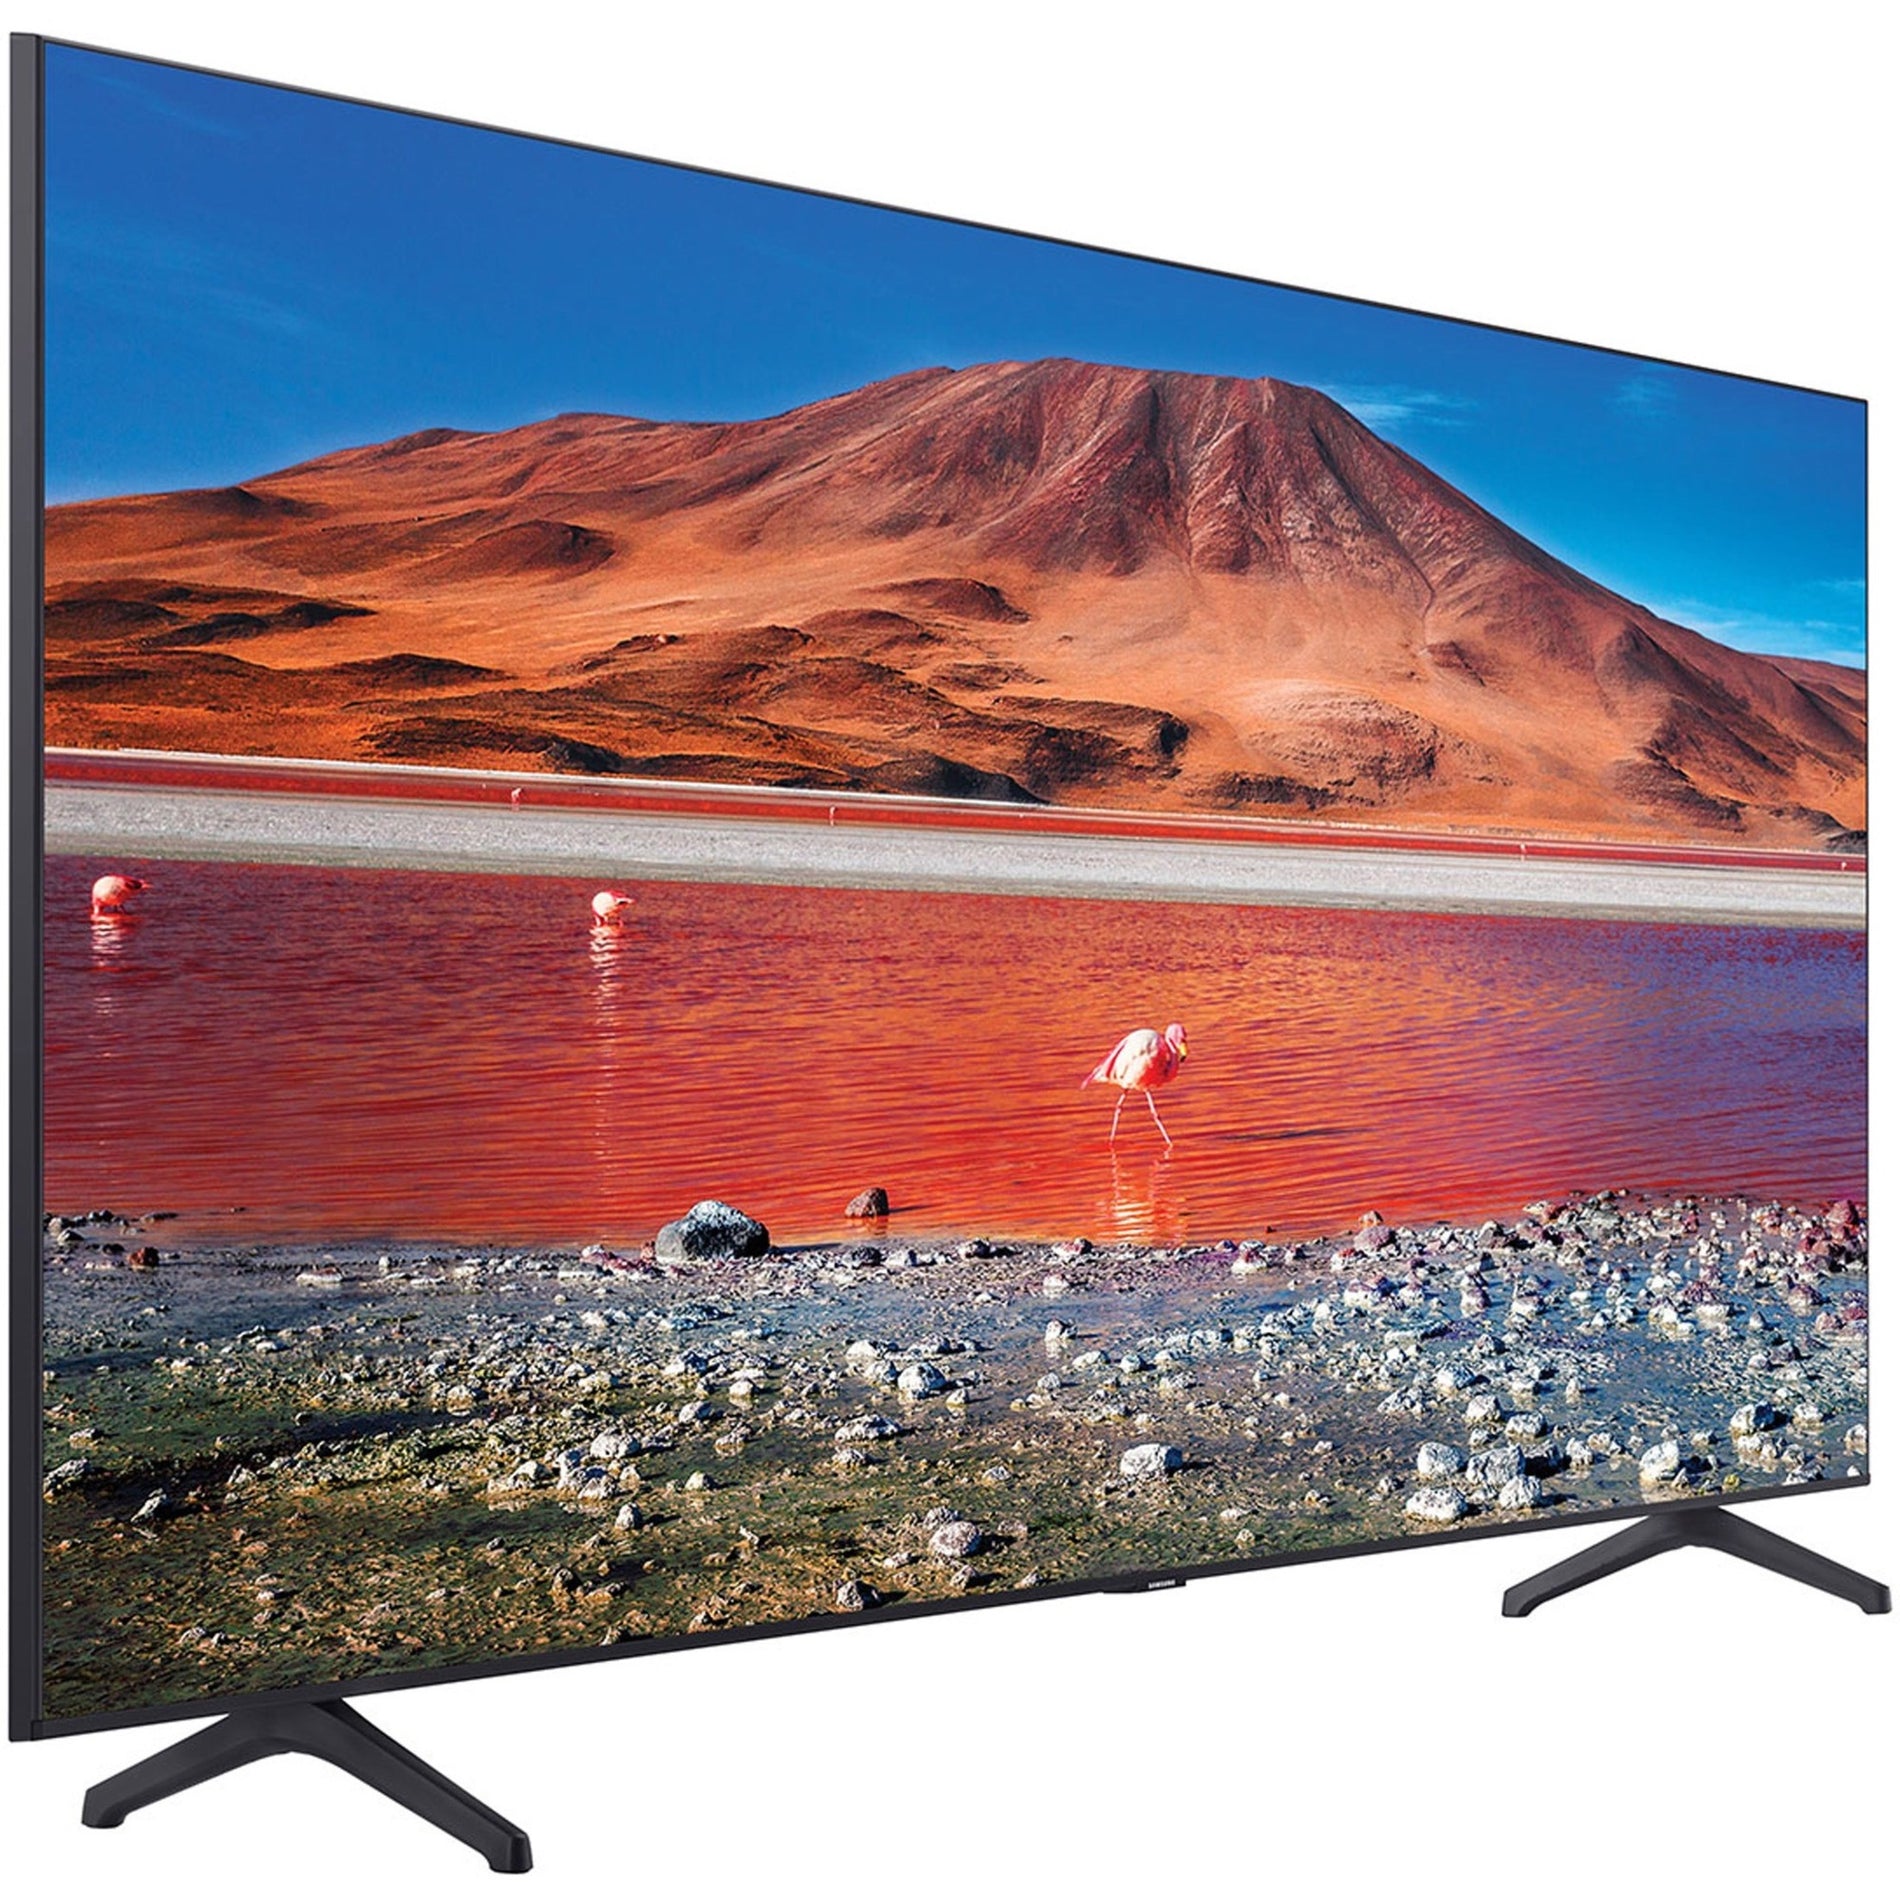 Samsung UN65TU7000FXZA 65" Class TU7000 Crystal UHD 4K Smart TV (2020), 120Hz, 2 HDMI Ports, PurColor